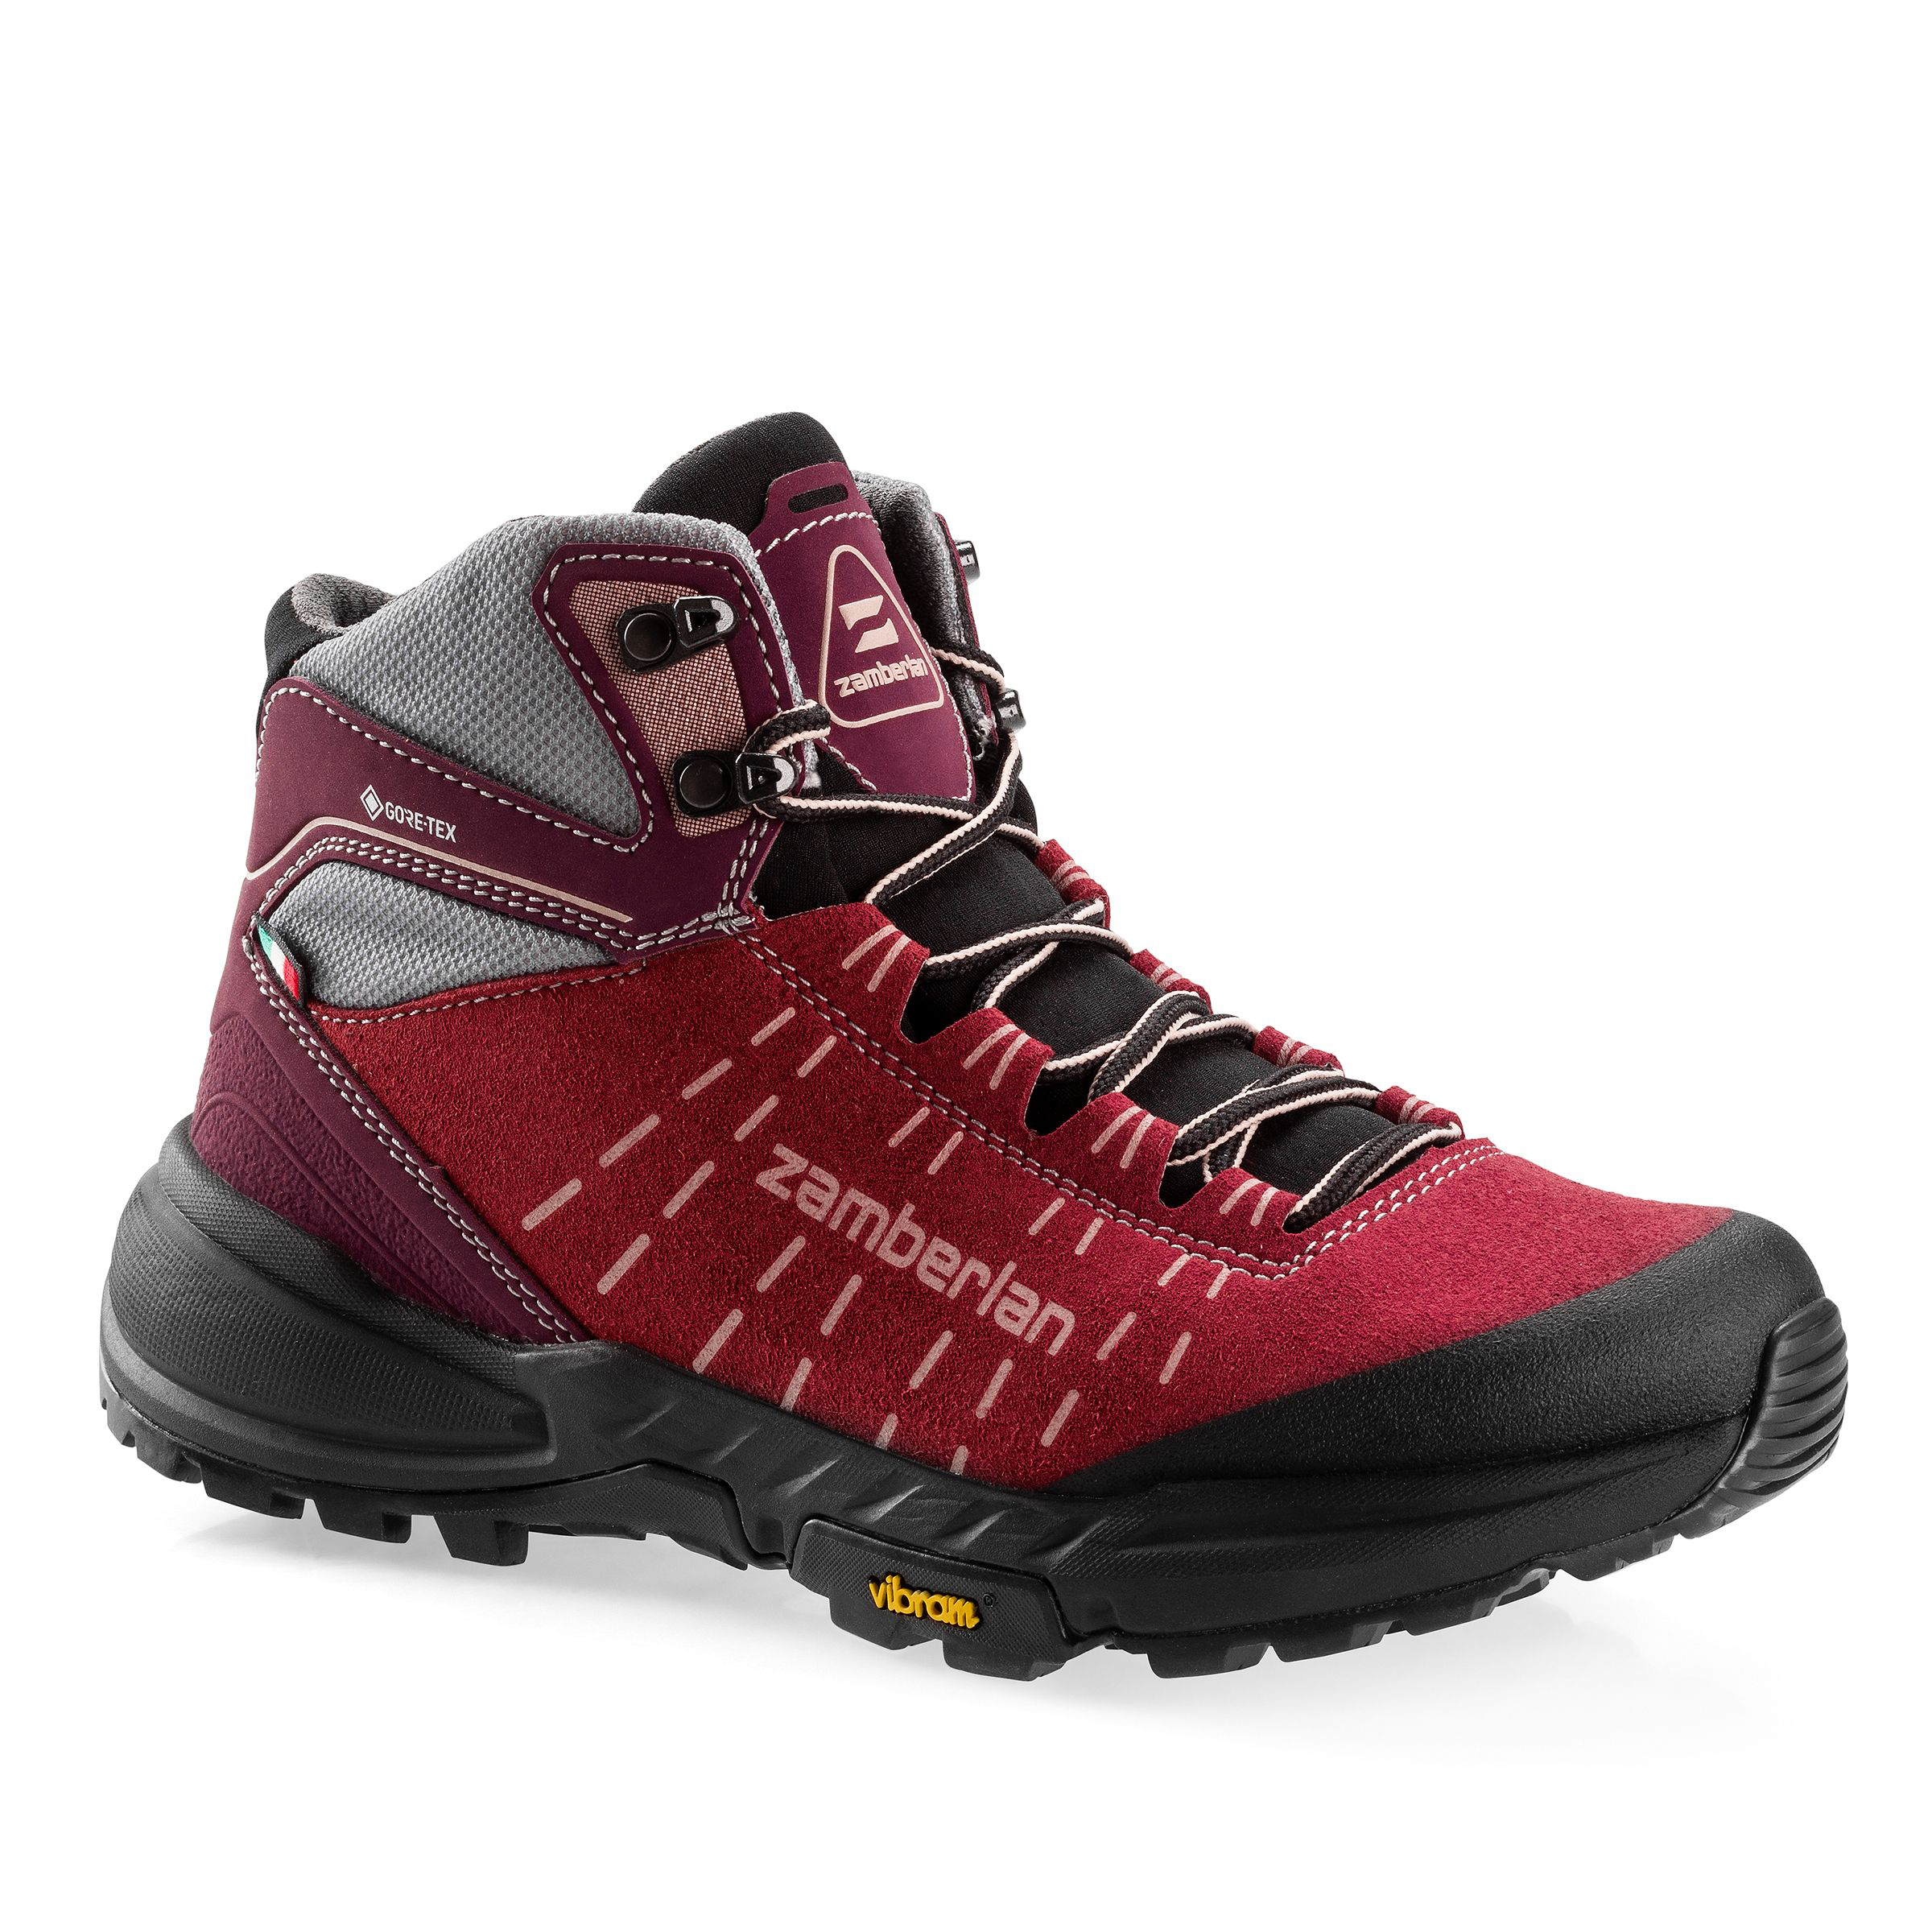 Zamberlan 334 Circe GTX Waterproof Hiking Boots for Ladies - Purple - 9.5M